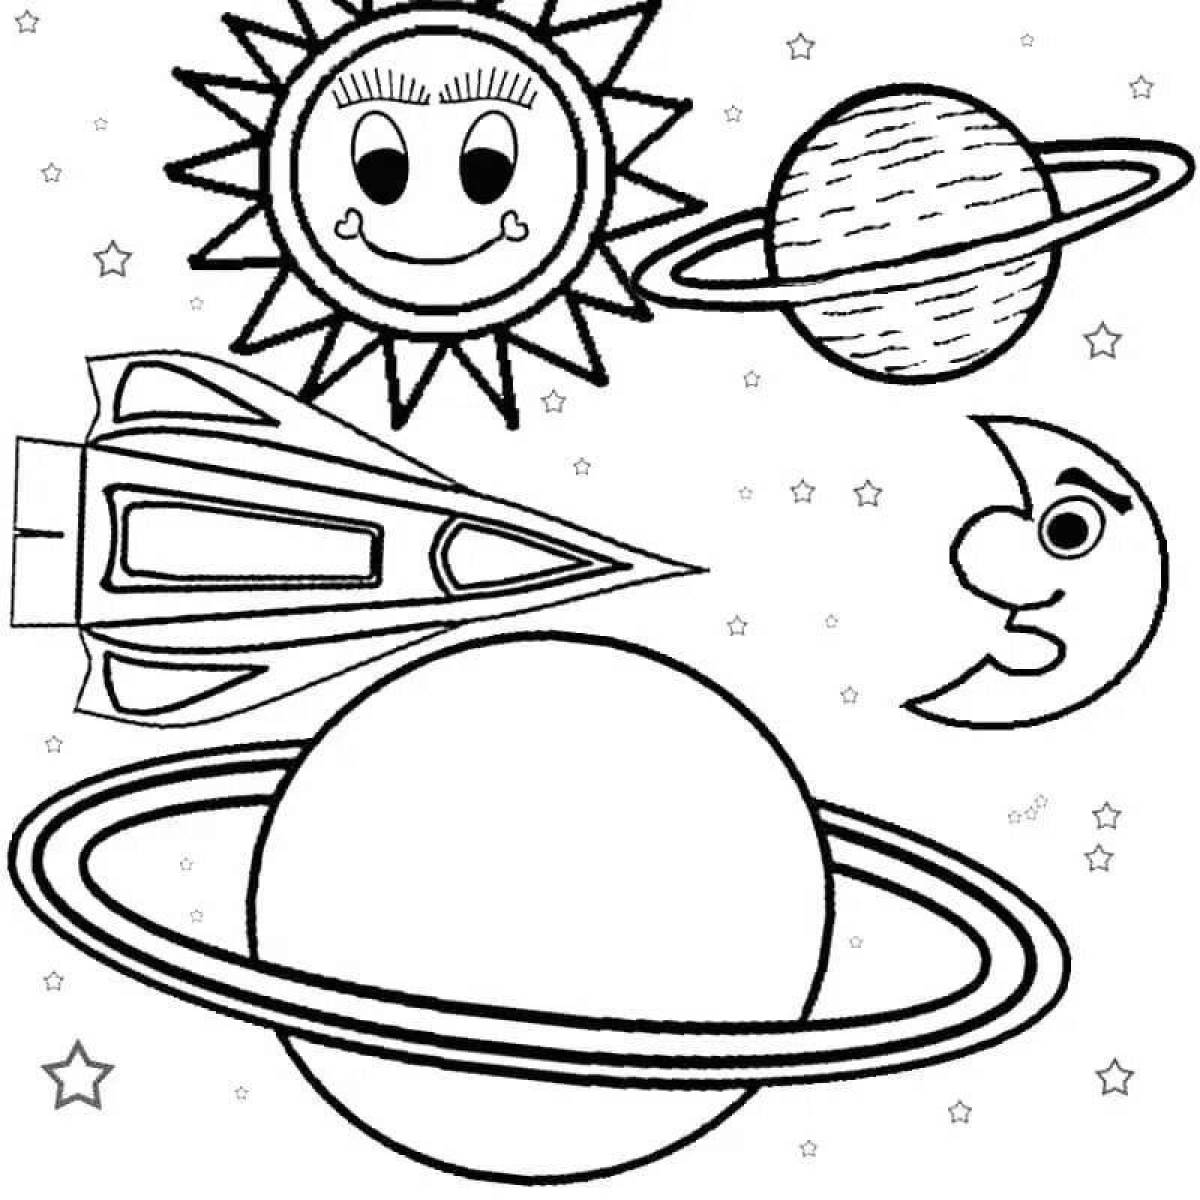 Планеты для раскрашивания. Раскраска космос и планеты. Космос раскраска для детей. Планеты раскраска. Космические раскраски для детей.